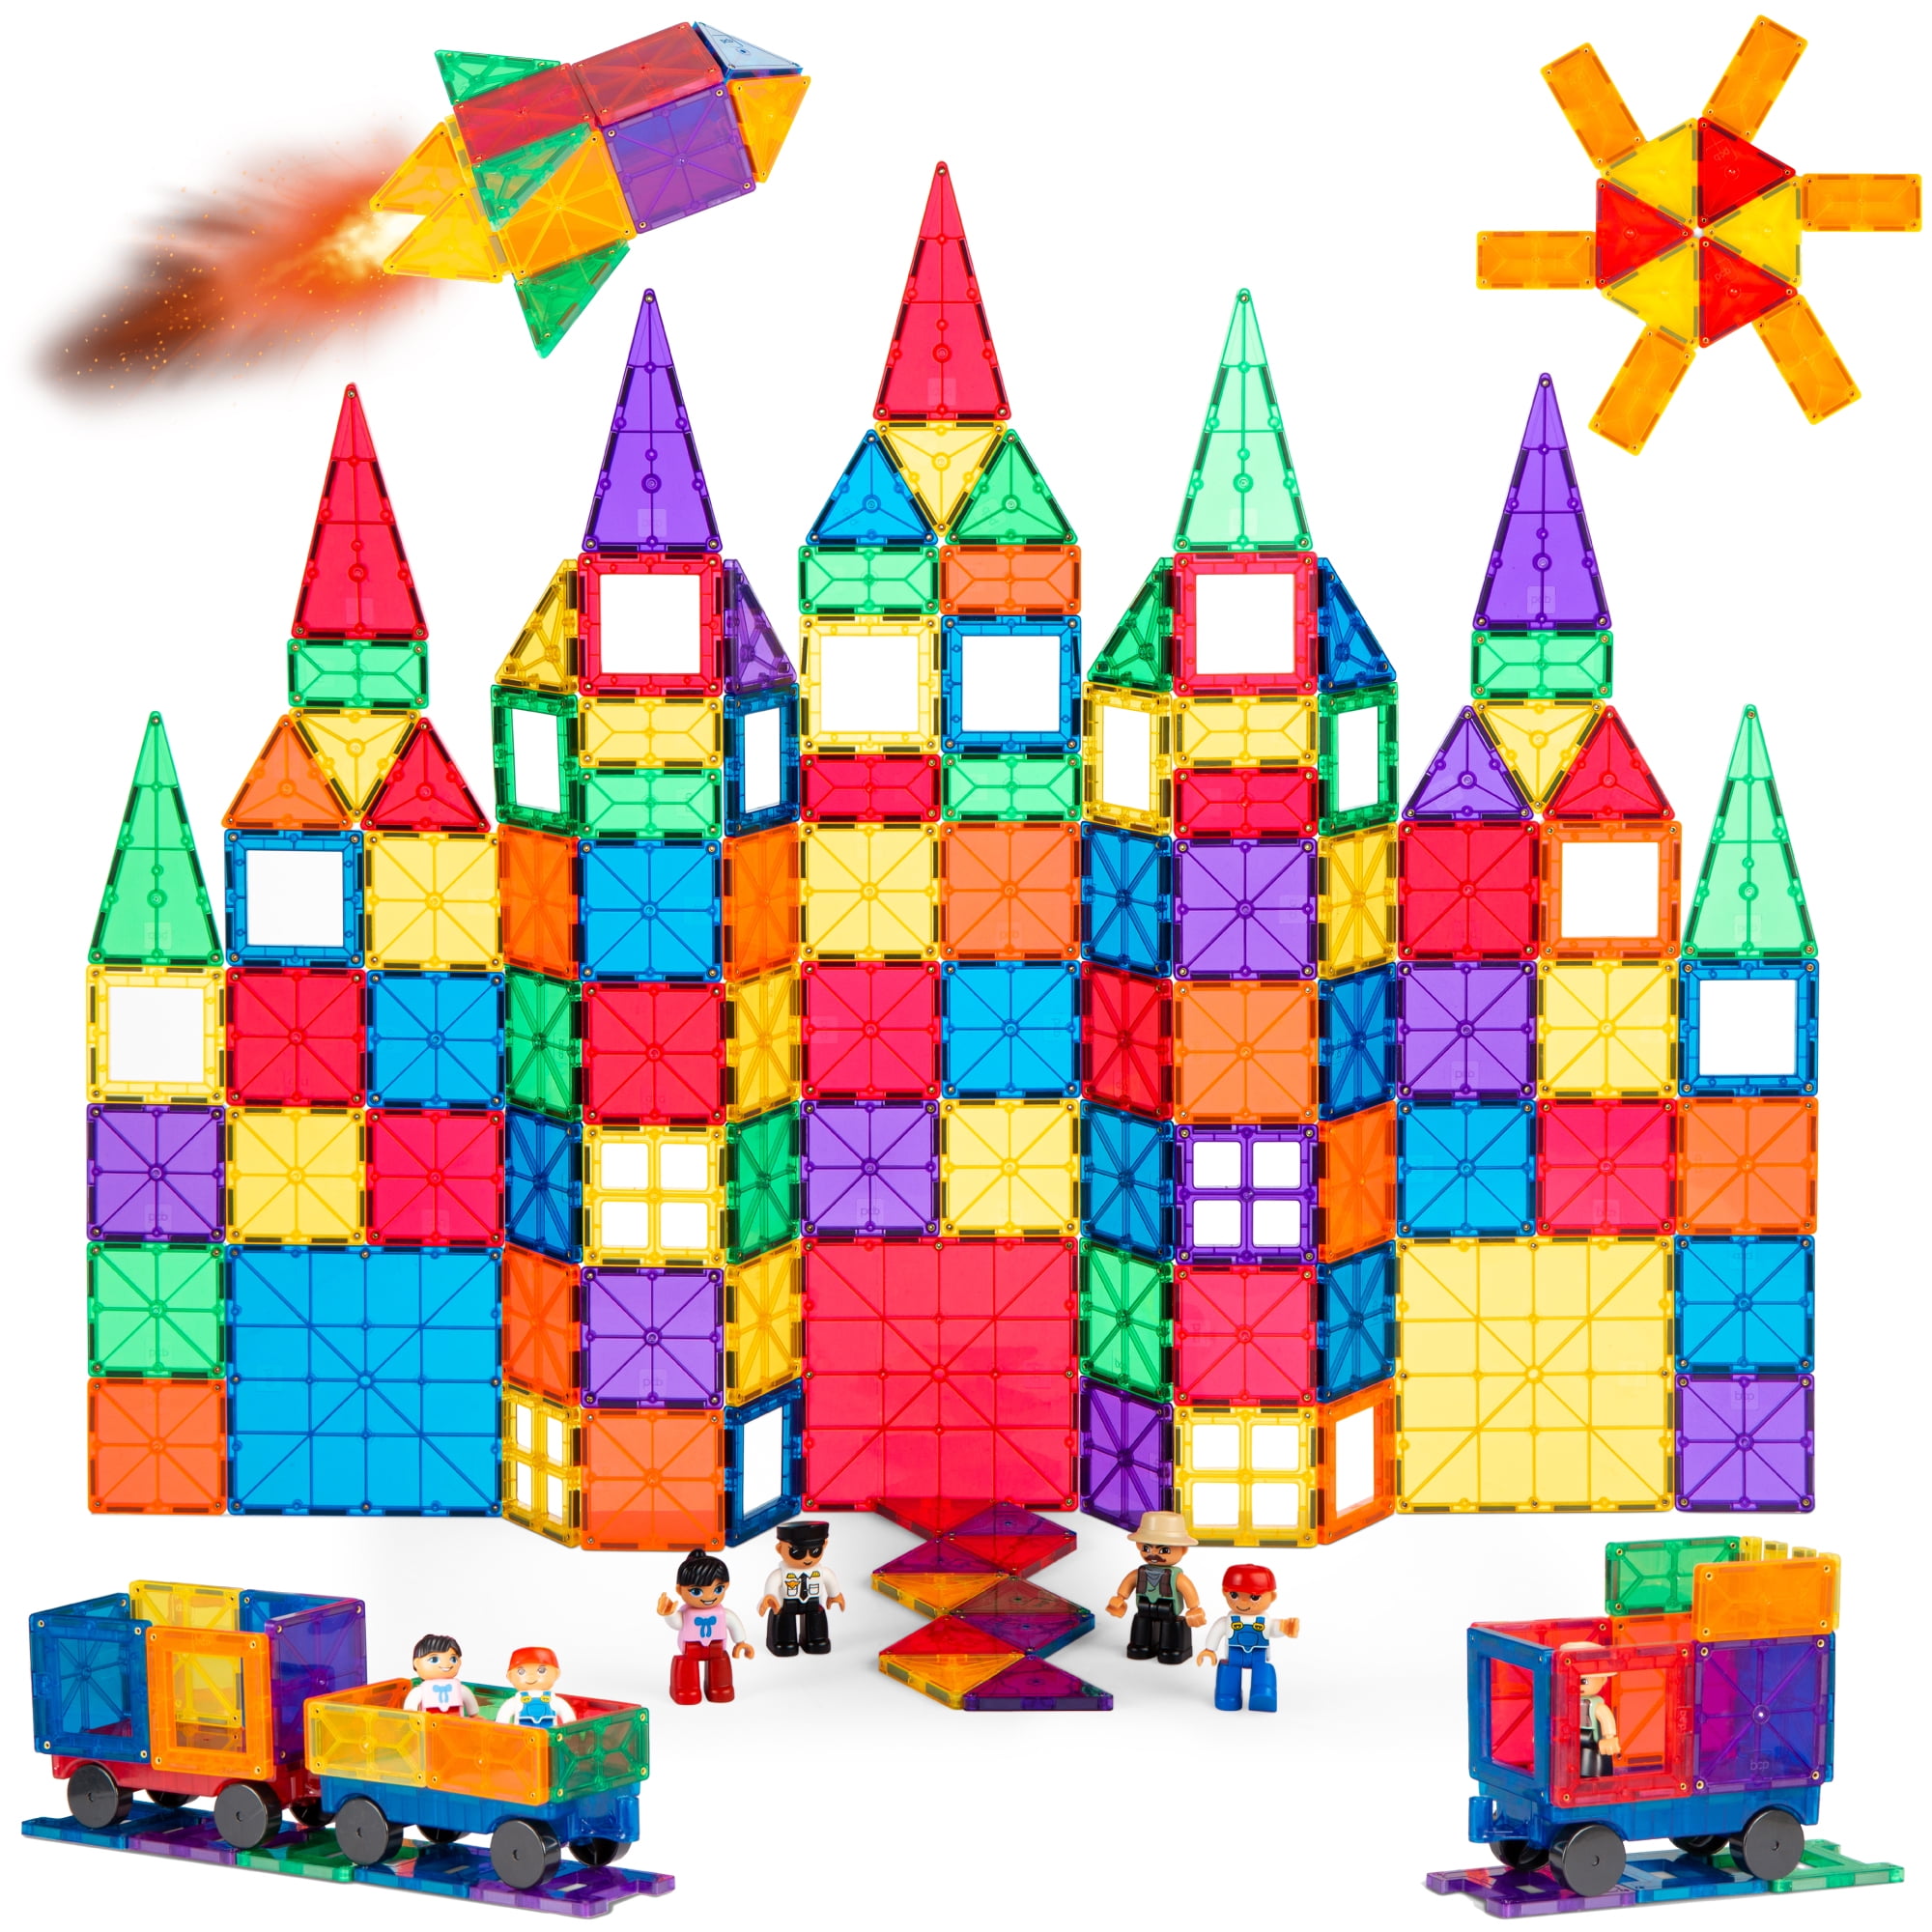 ASOK Magnetic Building Tiles Toy Set for Kids Magnetic Blocks 3D Castle Magnetic Educational Toys Tiles Set for 3 4 5 6 7 Years Old Boys Girls Gifts 176pcs